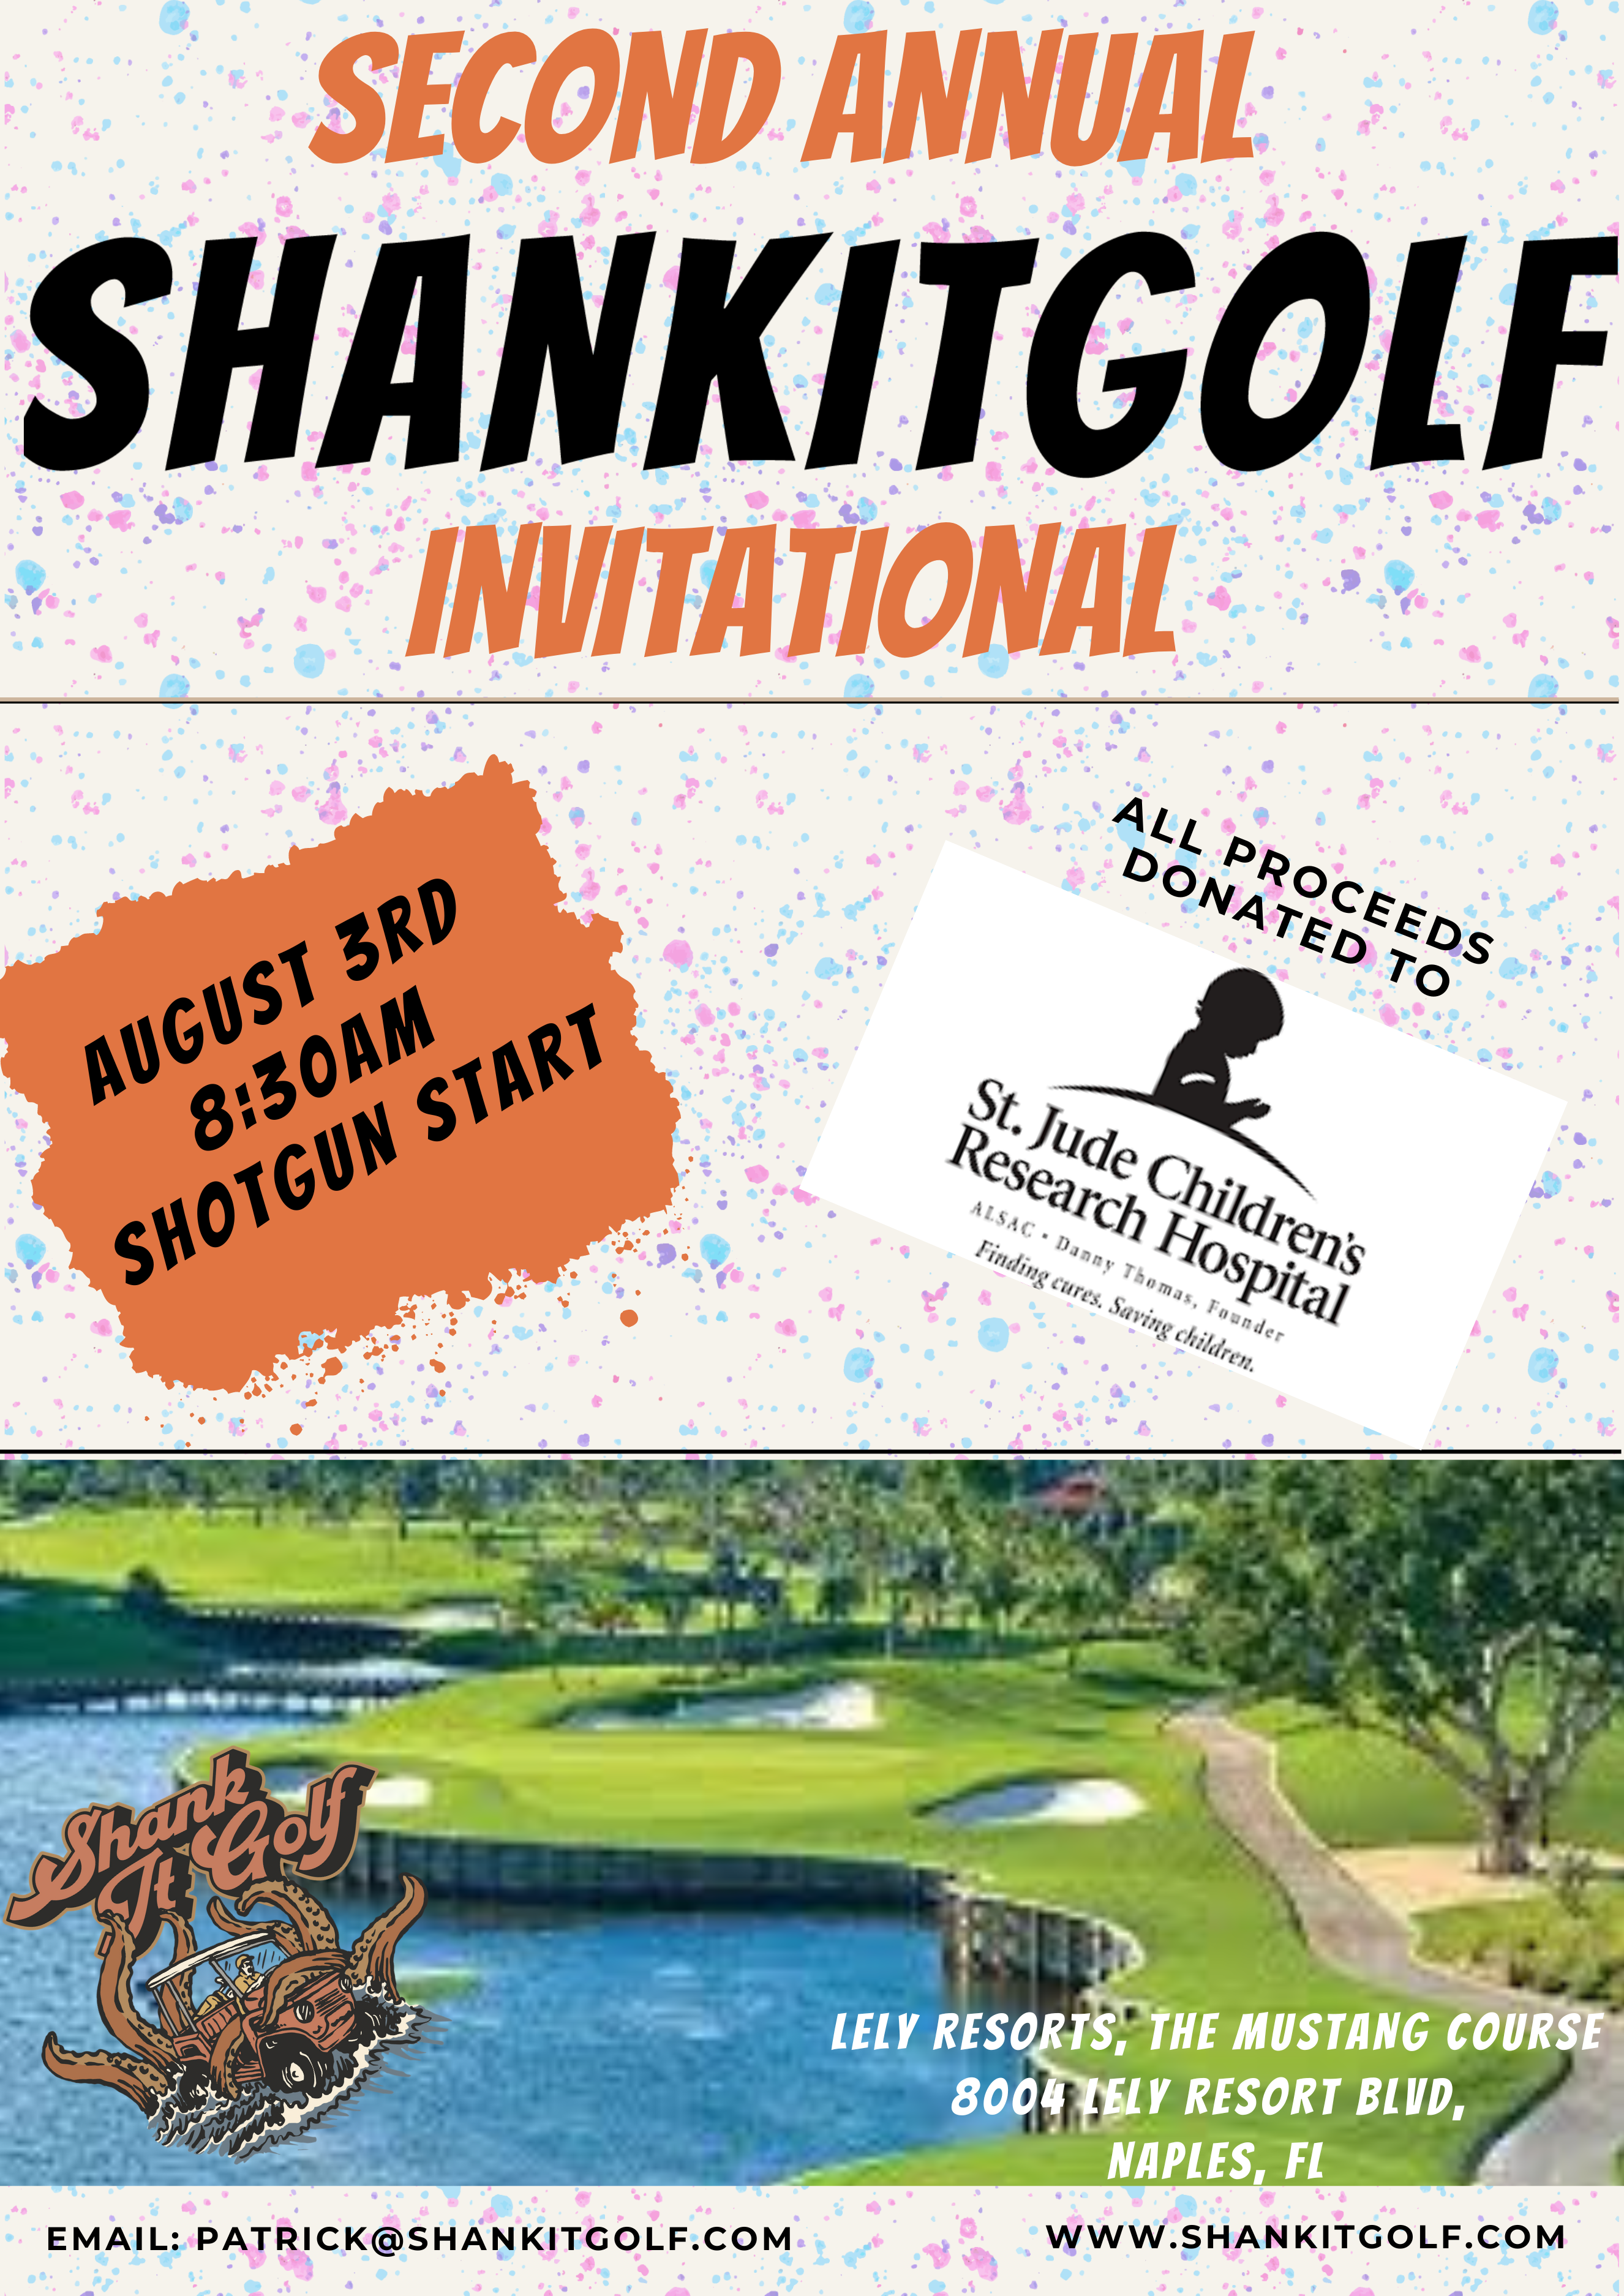 2nd Annual SHANKITGOLF invitational